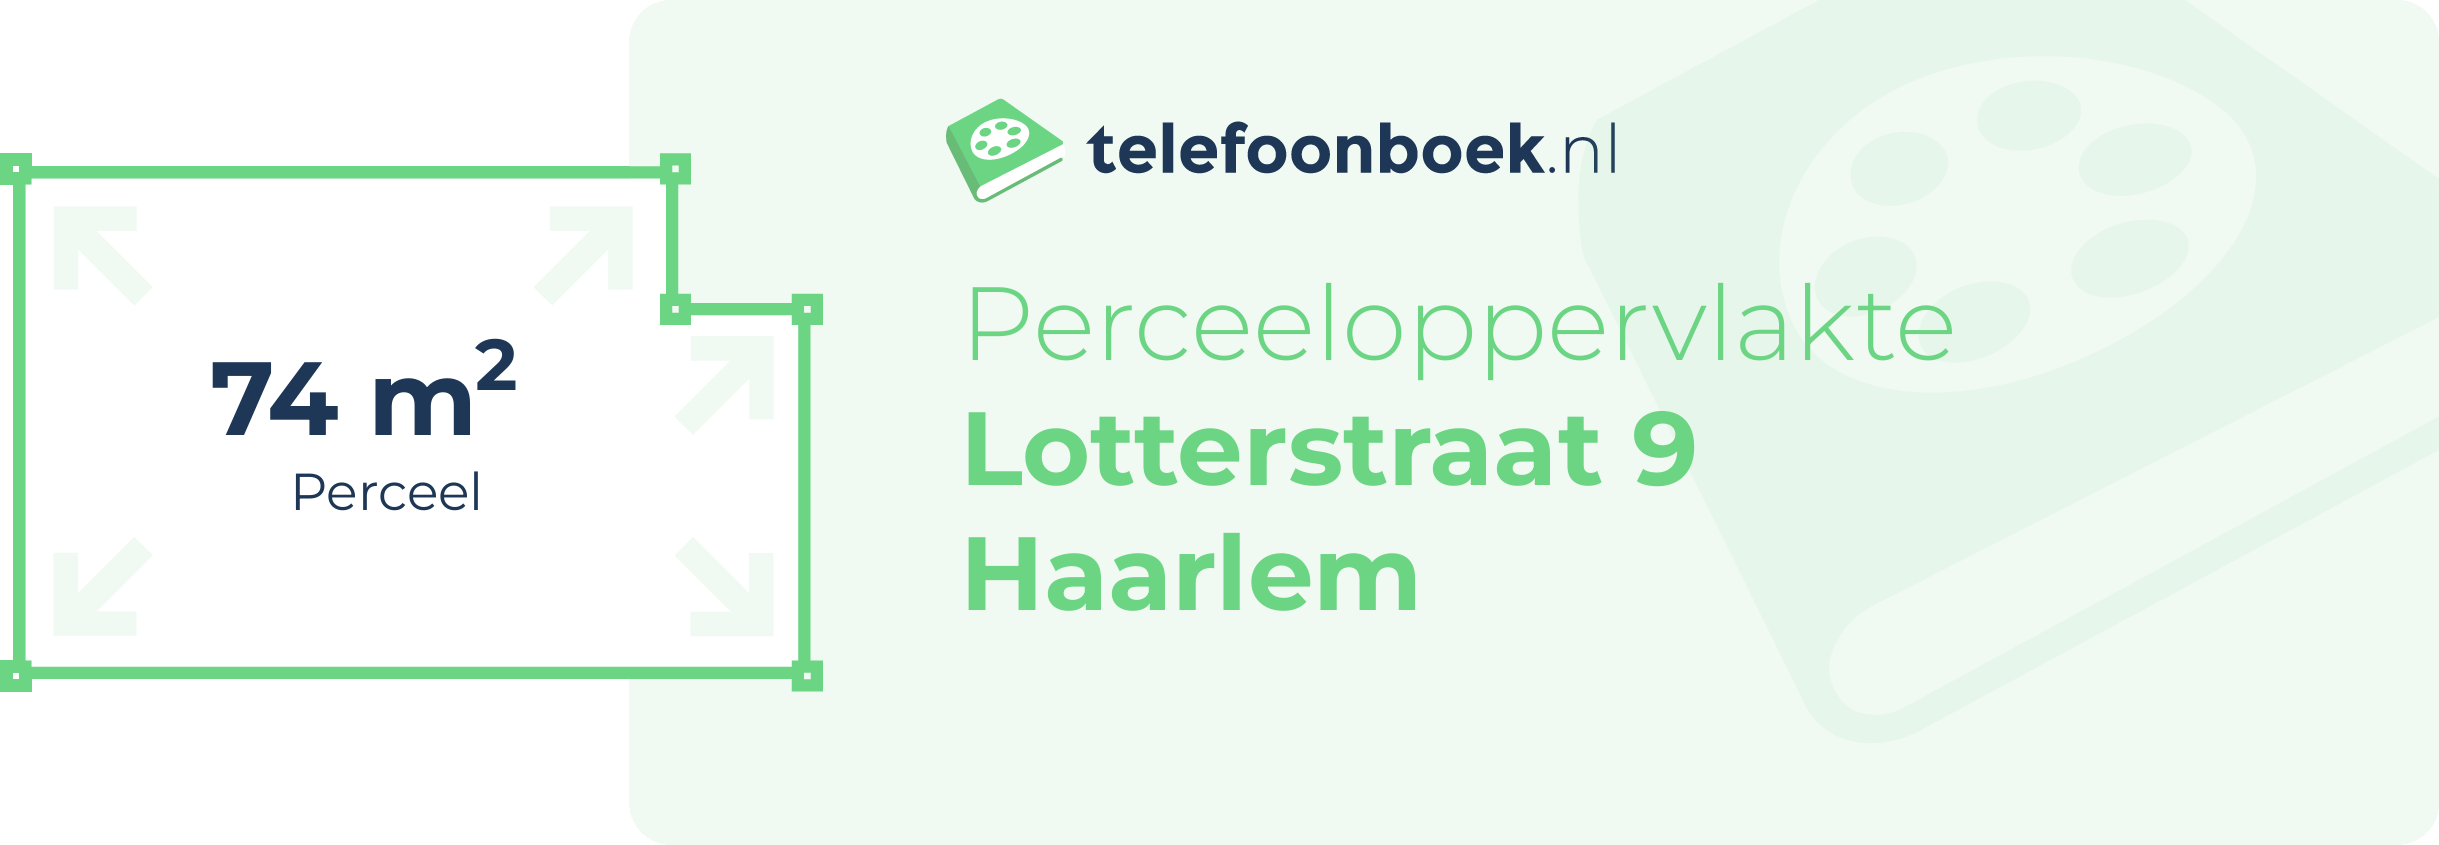 Perceeloppervlakte Lotterstraat 9 Haarlem